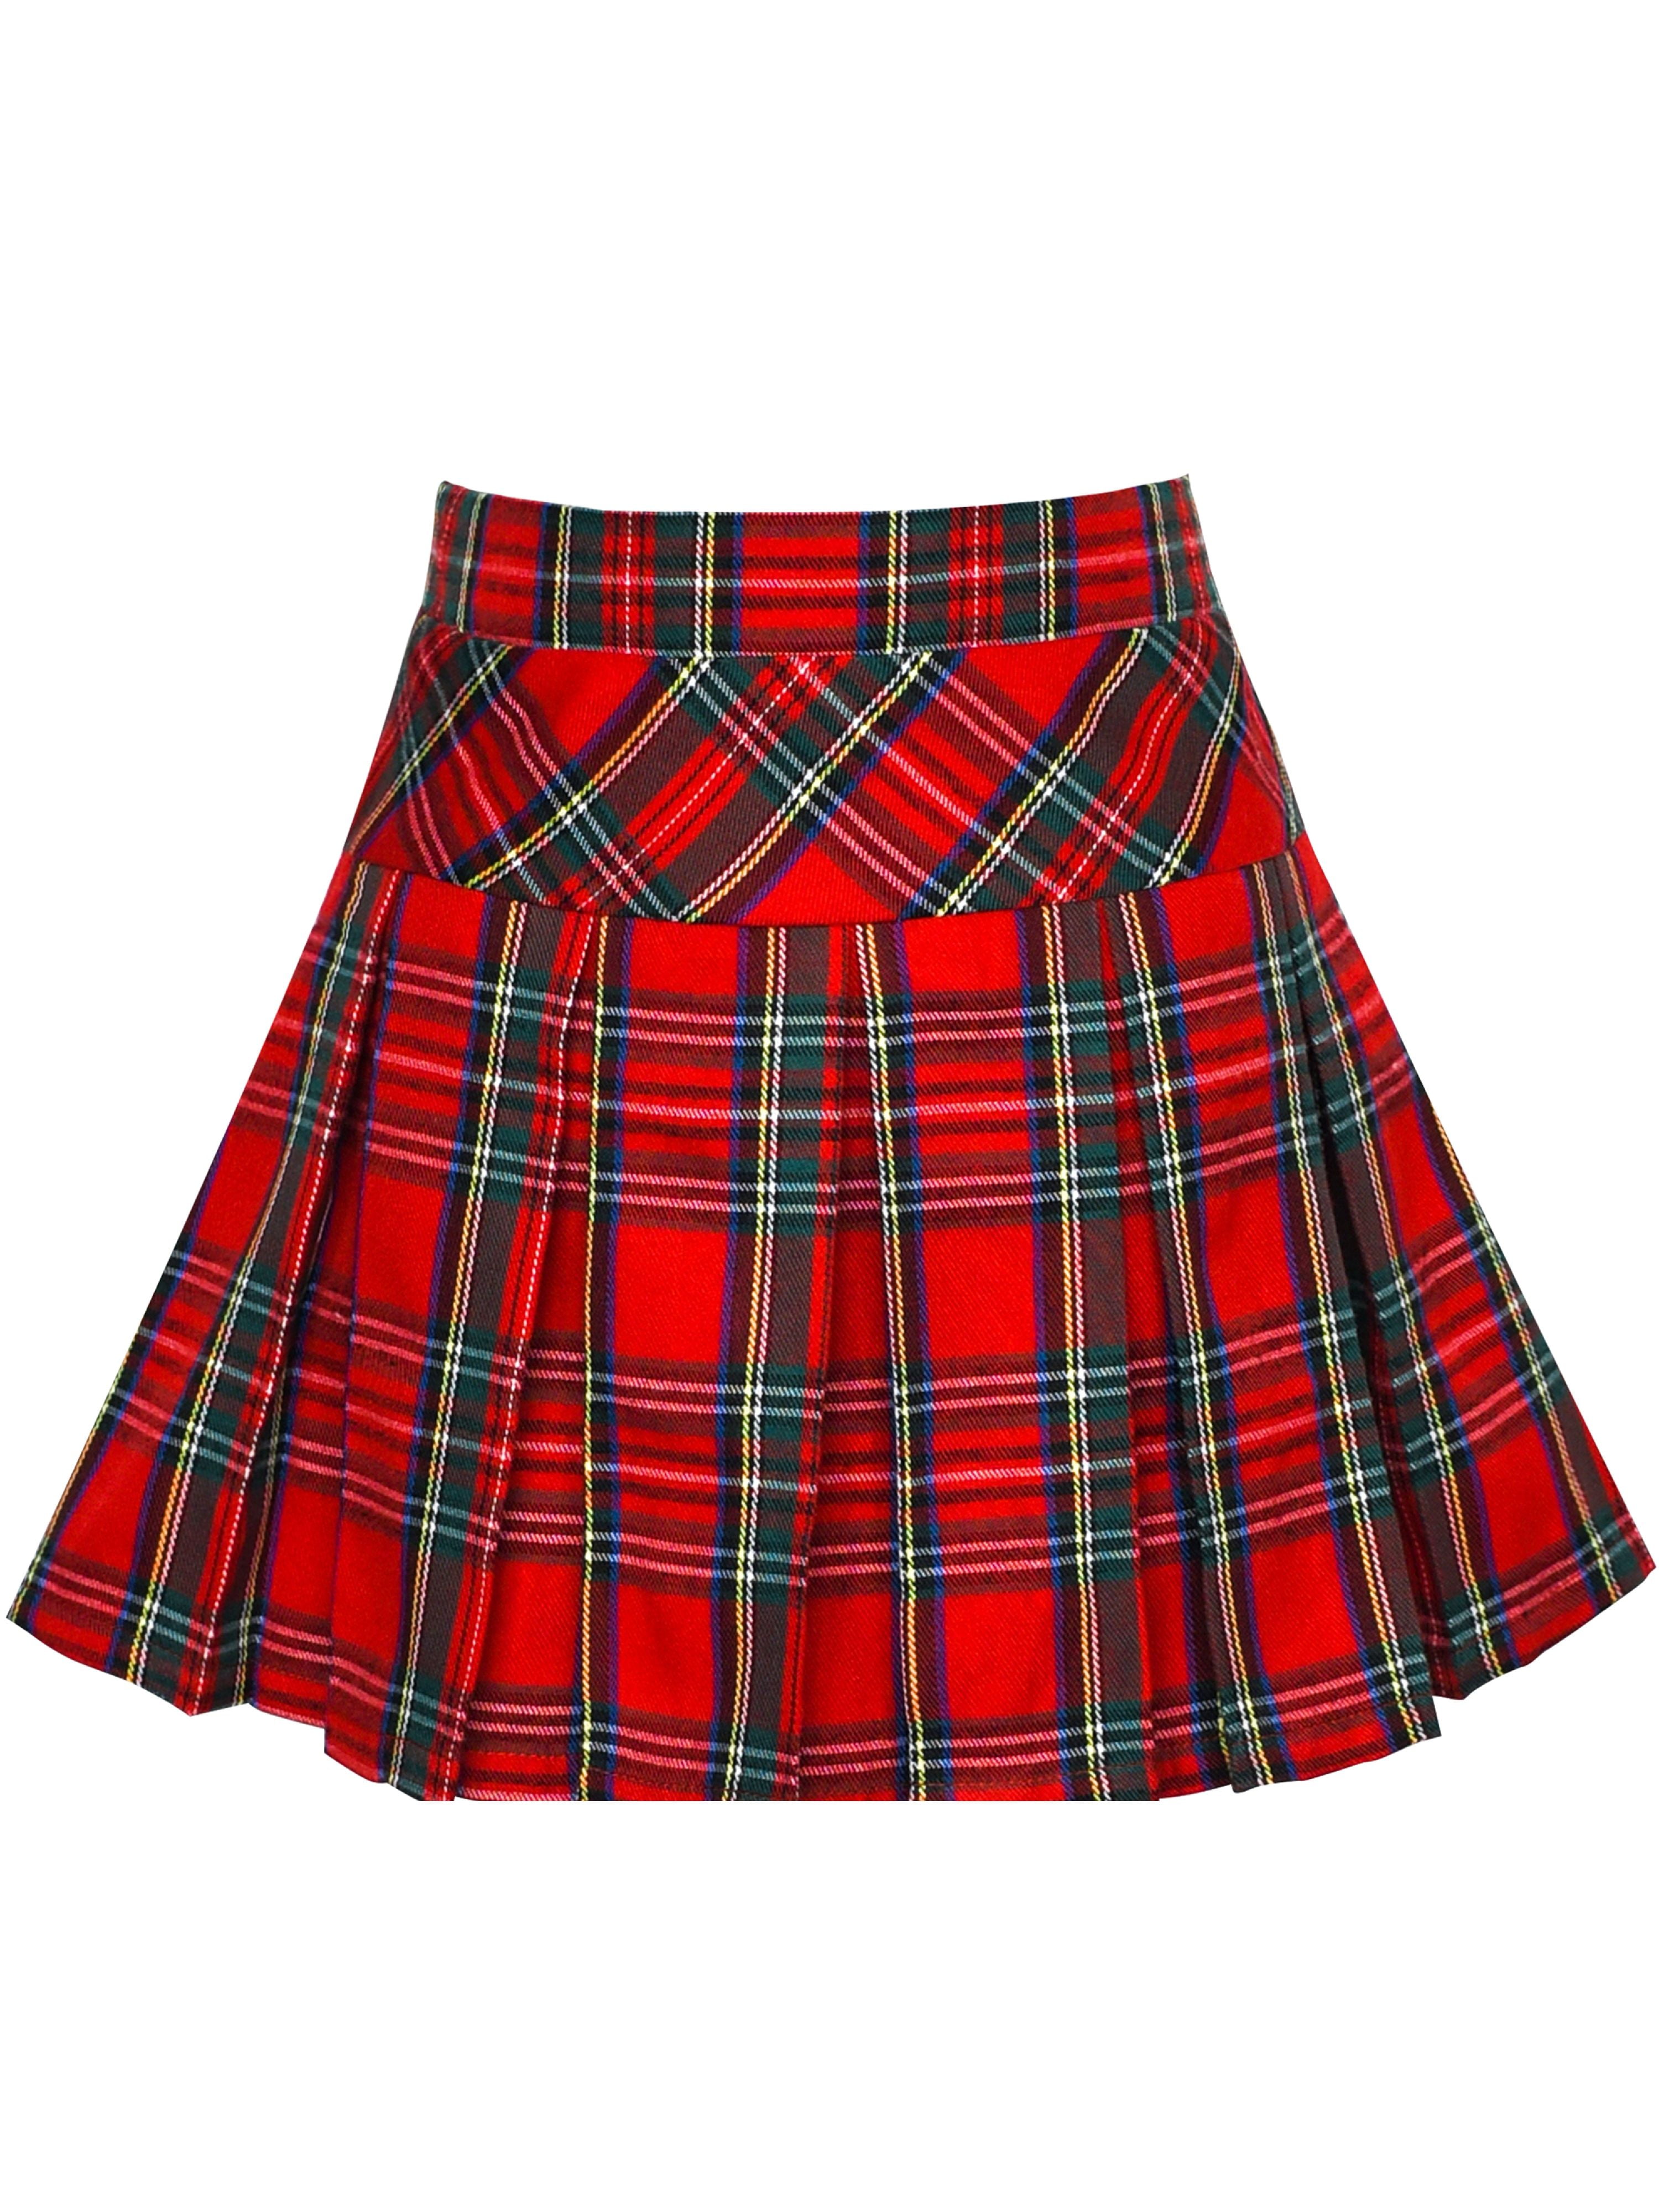 Mother & Kids Girls' Clothing Children Clothing School Plaid Skirt ...